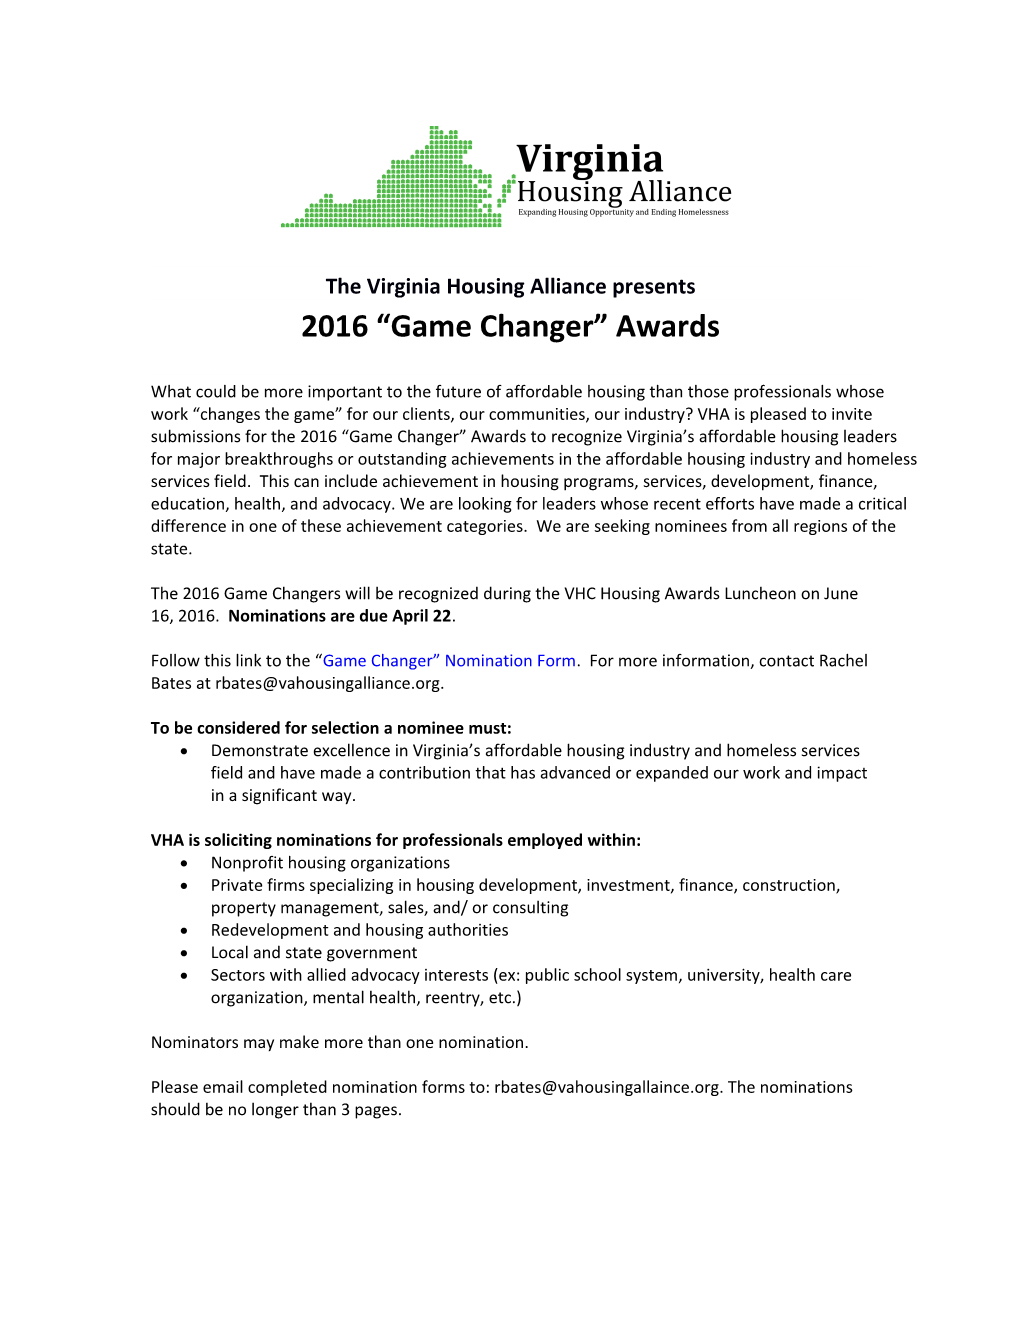 The Virginia Housing Alliance Presents